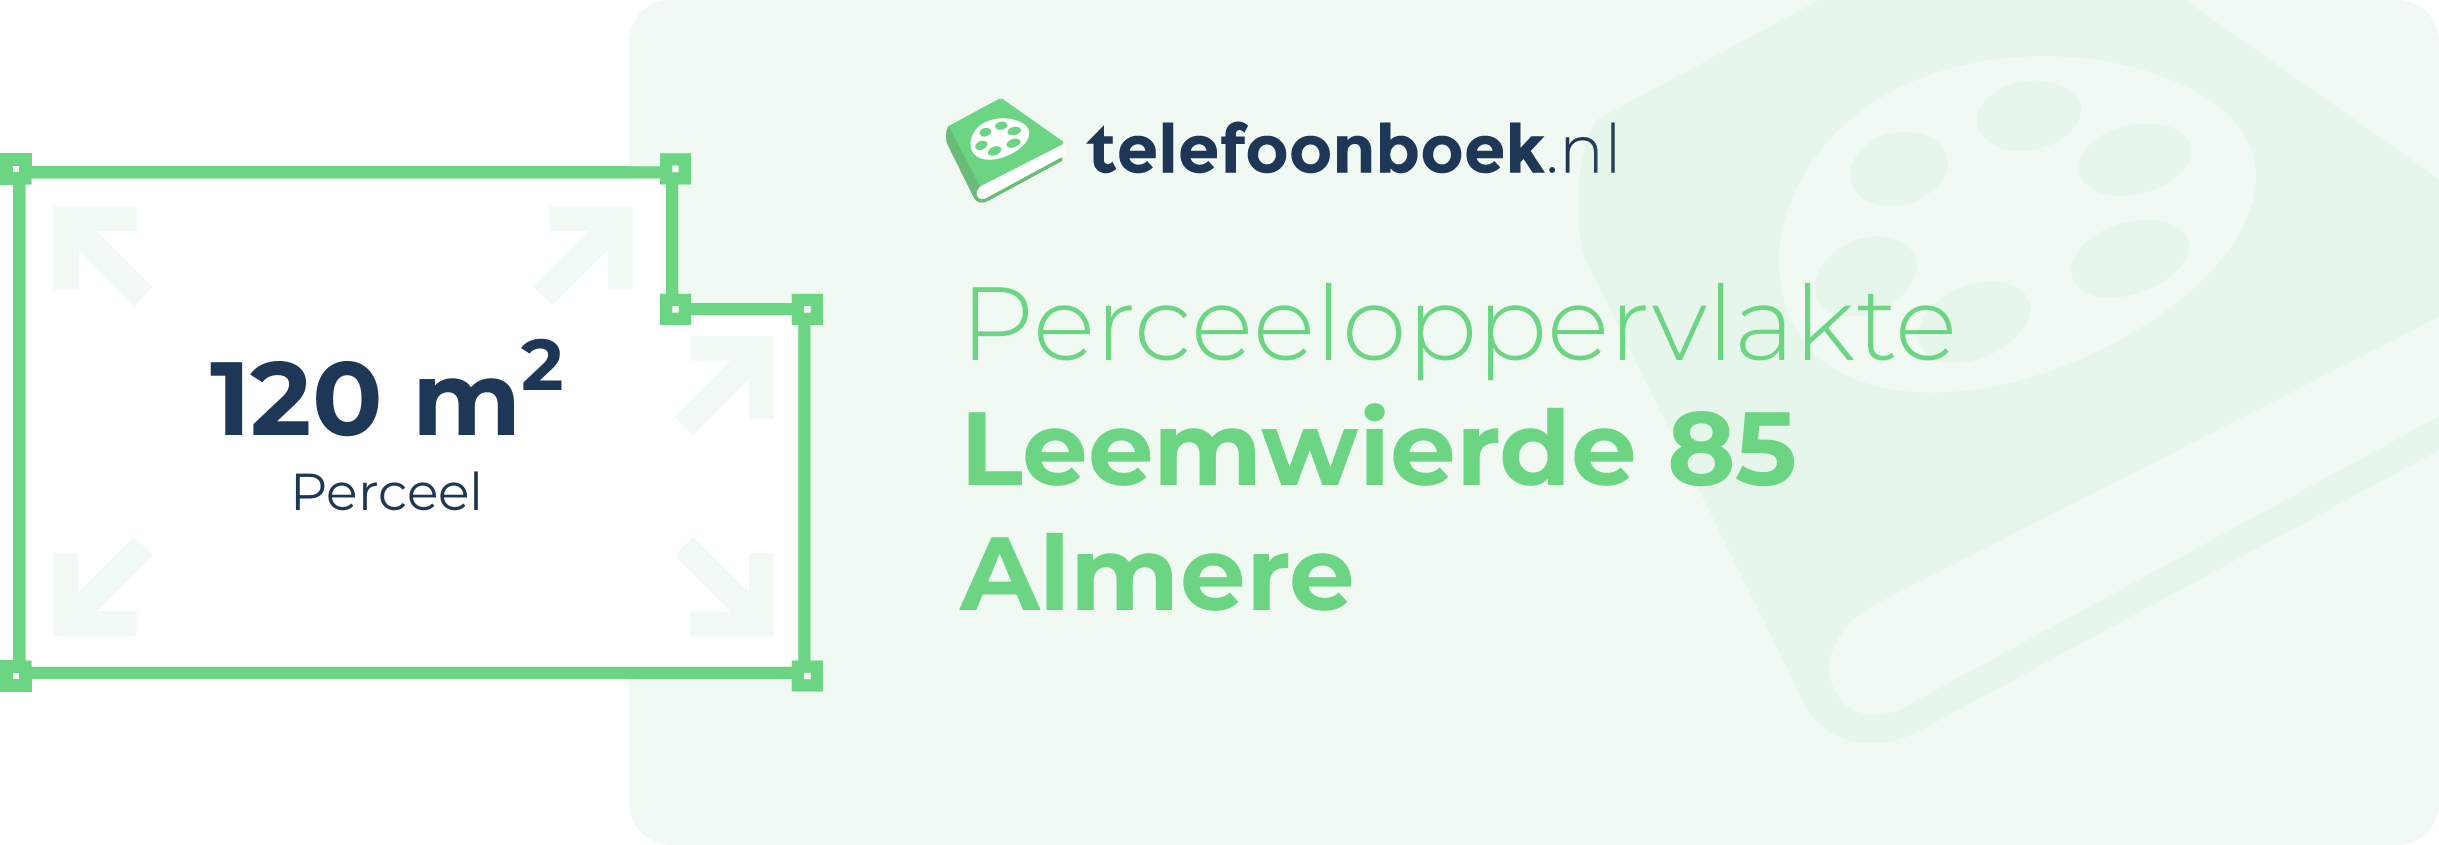 Perceeloppervlakte Leemwierde 85 Almere